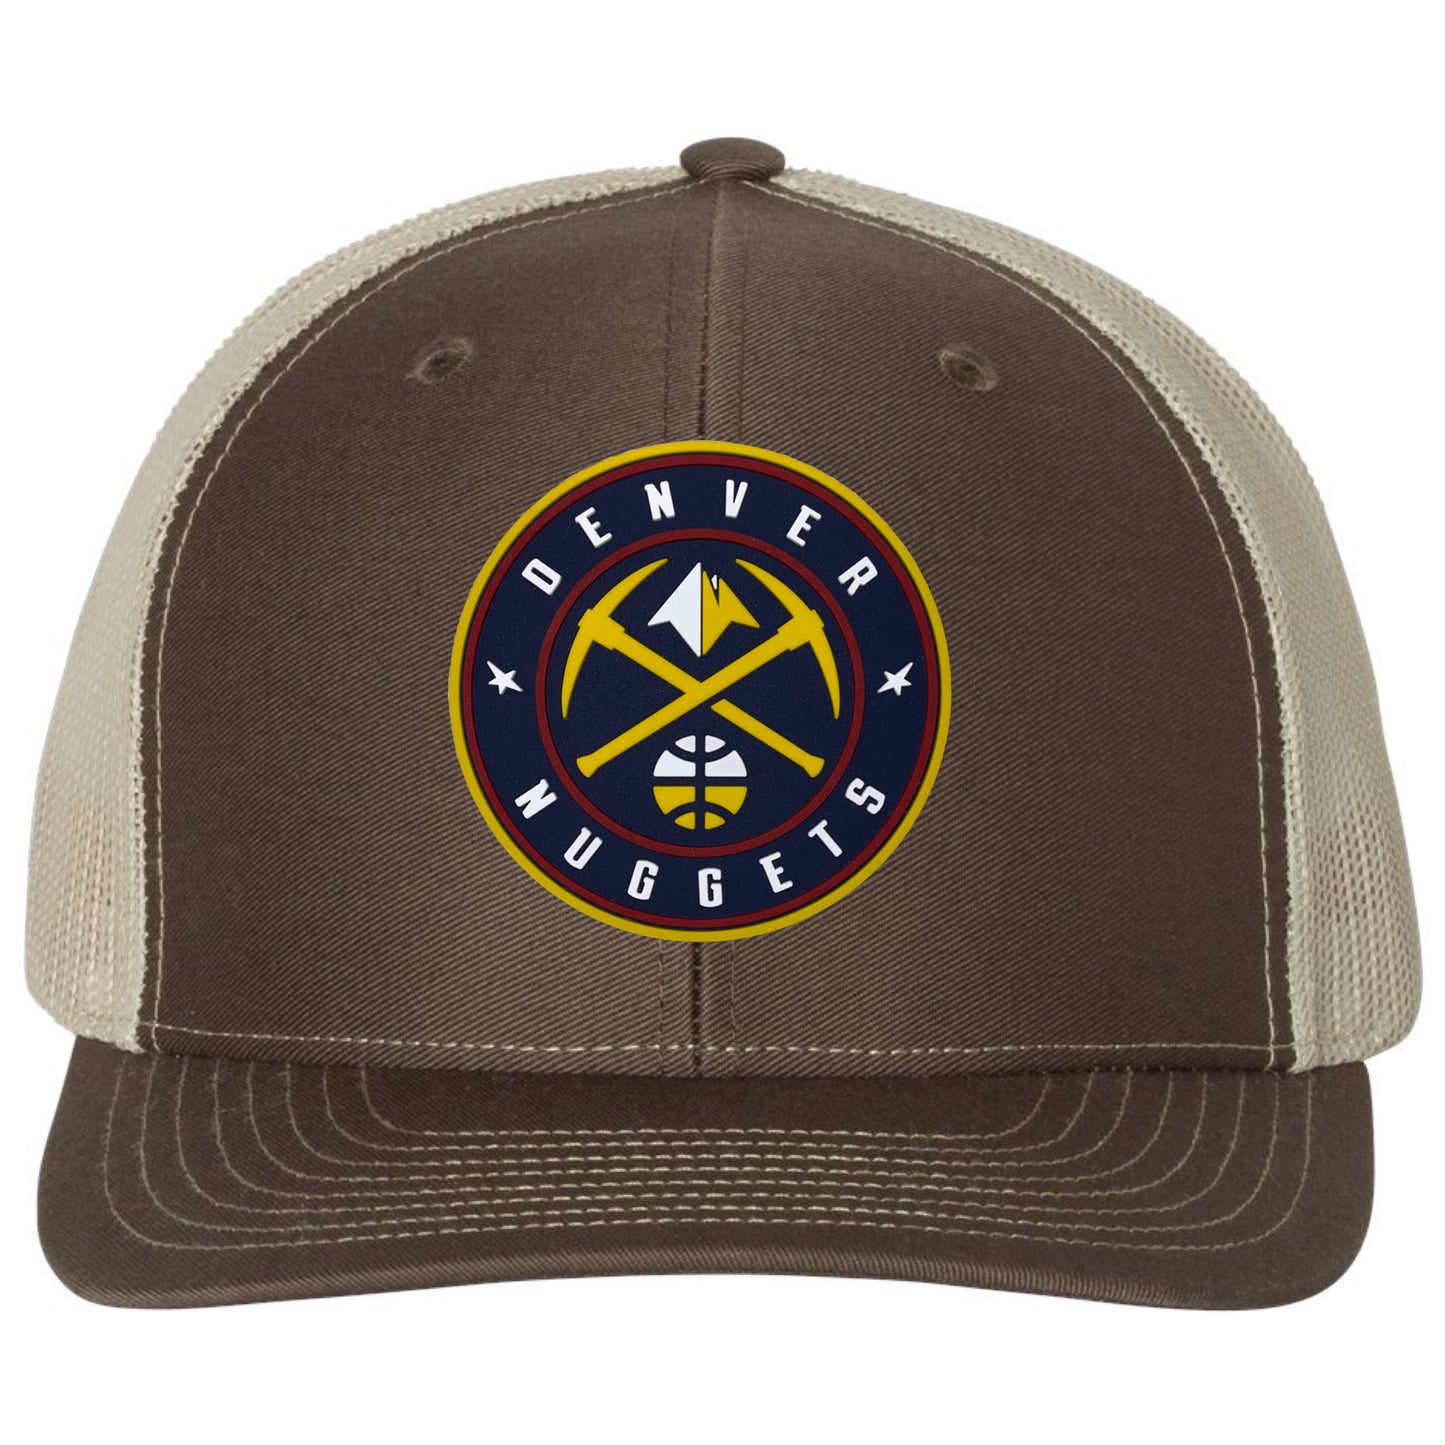 Denver Nuggets 3D Patch Snapback Trucker Hat- Brown/ Khaki - Ten Gallon Hat Co.